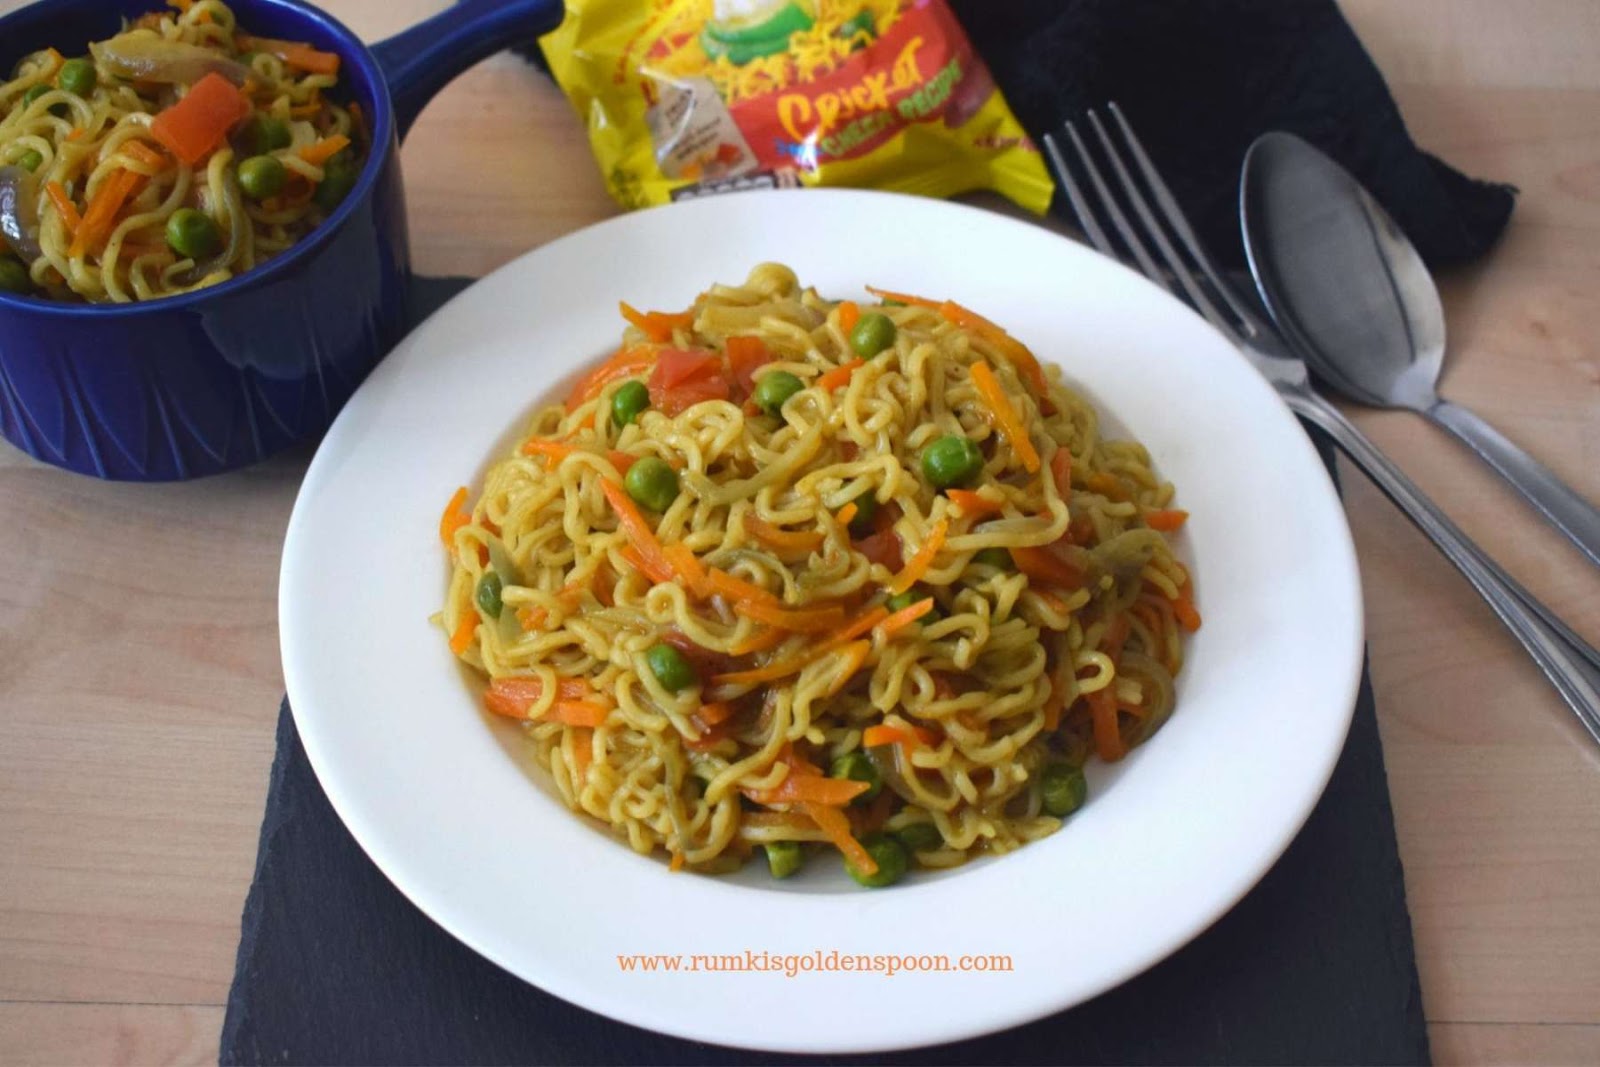 maggi recipe with vegetables, maggi masala recipe, instant noodles recipe, Vegetable Maggi Noodles, Indian recipe, Vegetarian recipe, vegan recipe, quick and easy recipe, healthy recipe, Rumki's Golden Spoon 